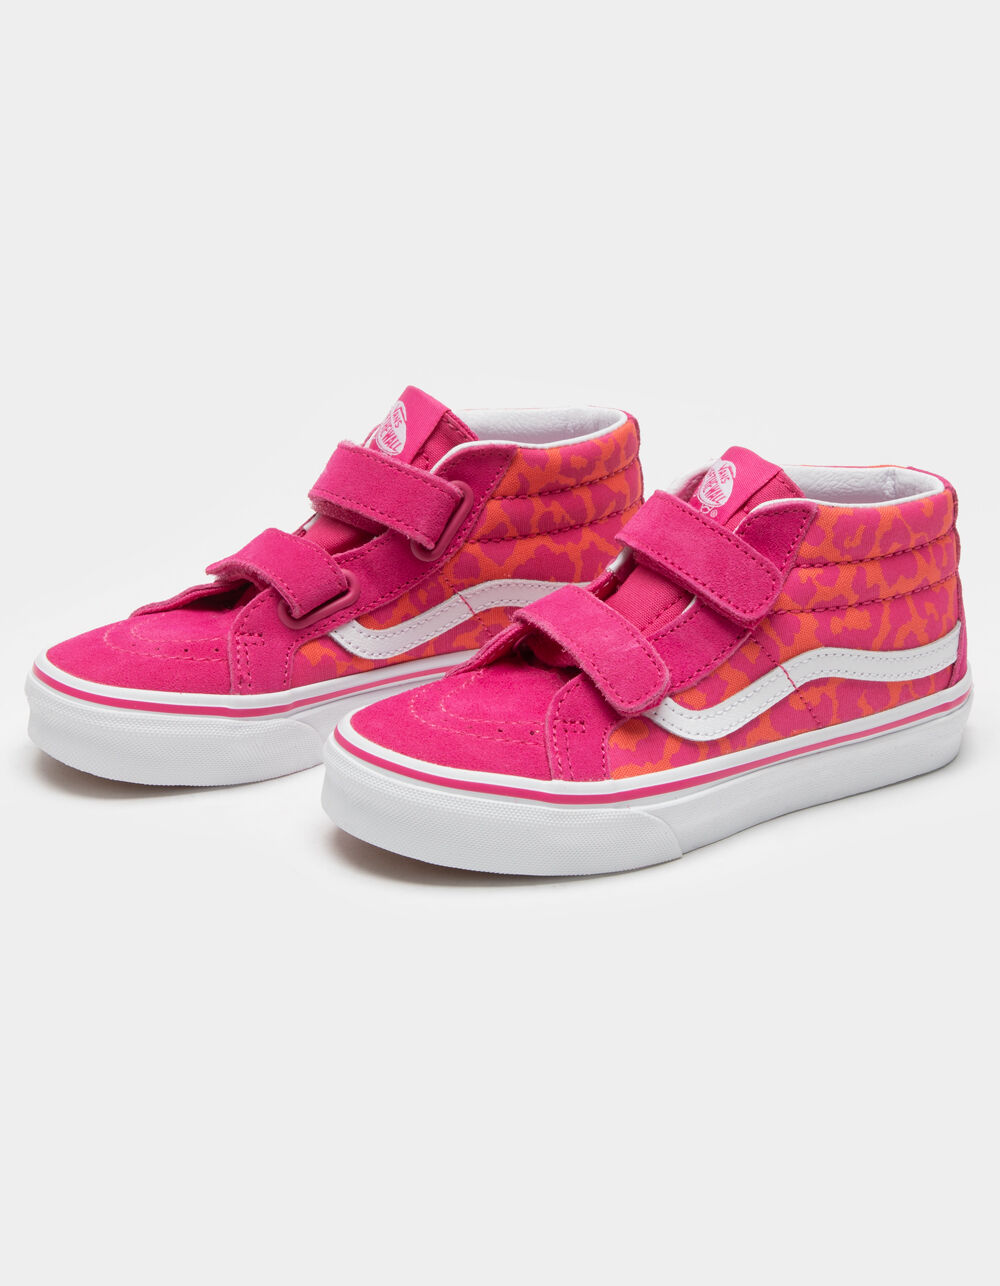 SUPREME®/ VANS® Dollar Skate Grosso Mid Pink - Neighborhood